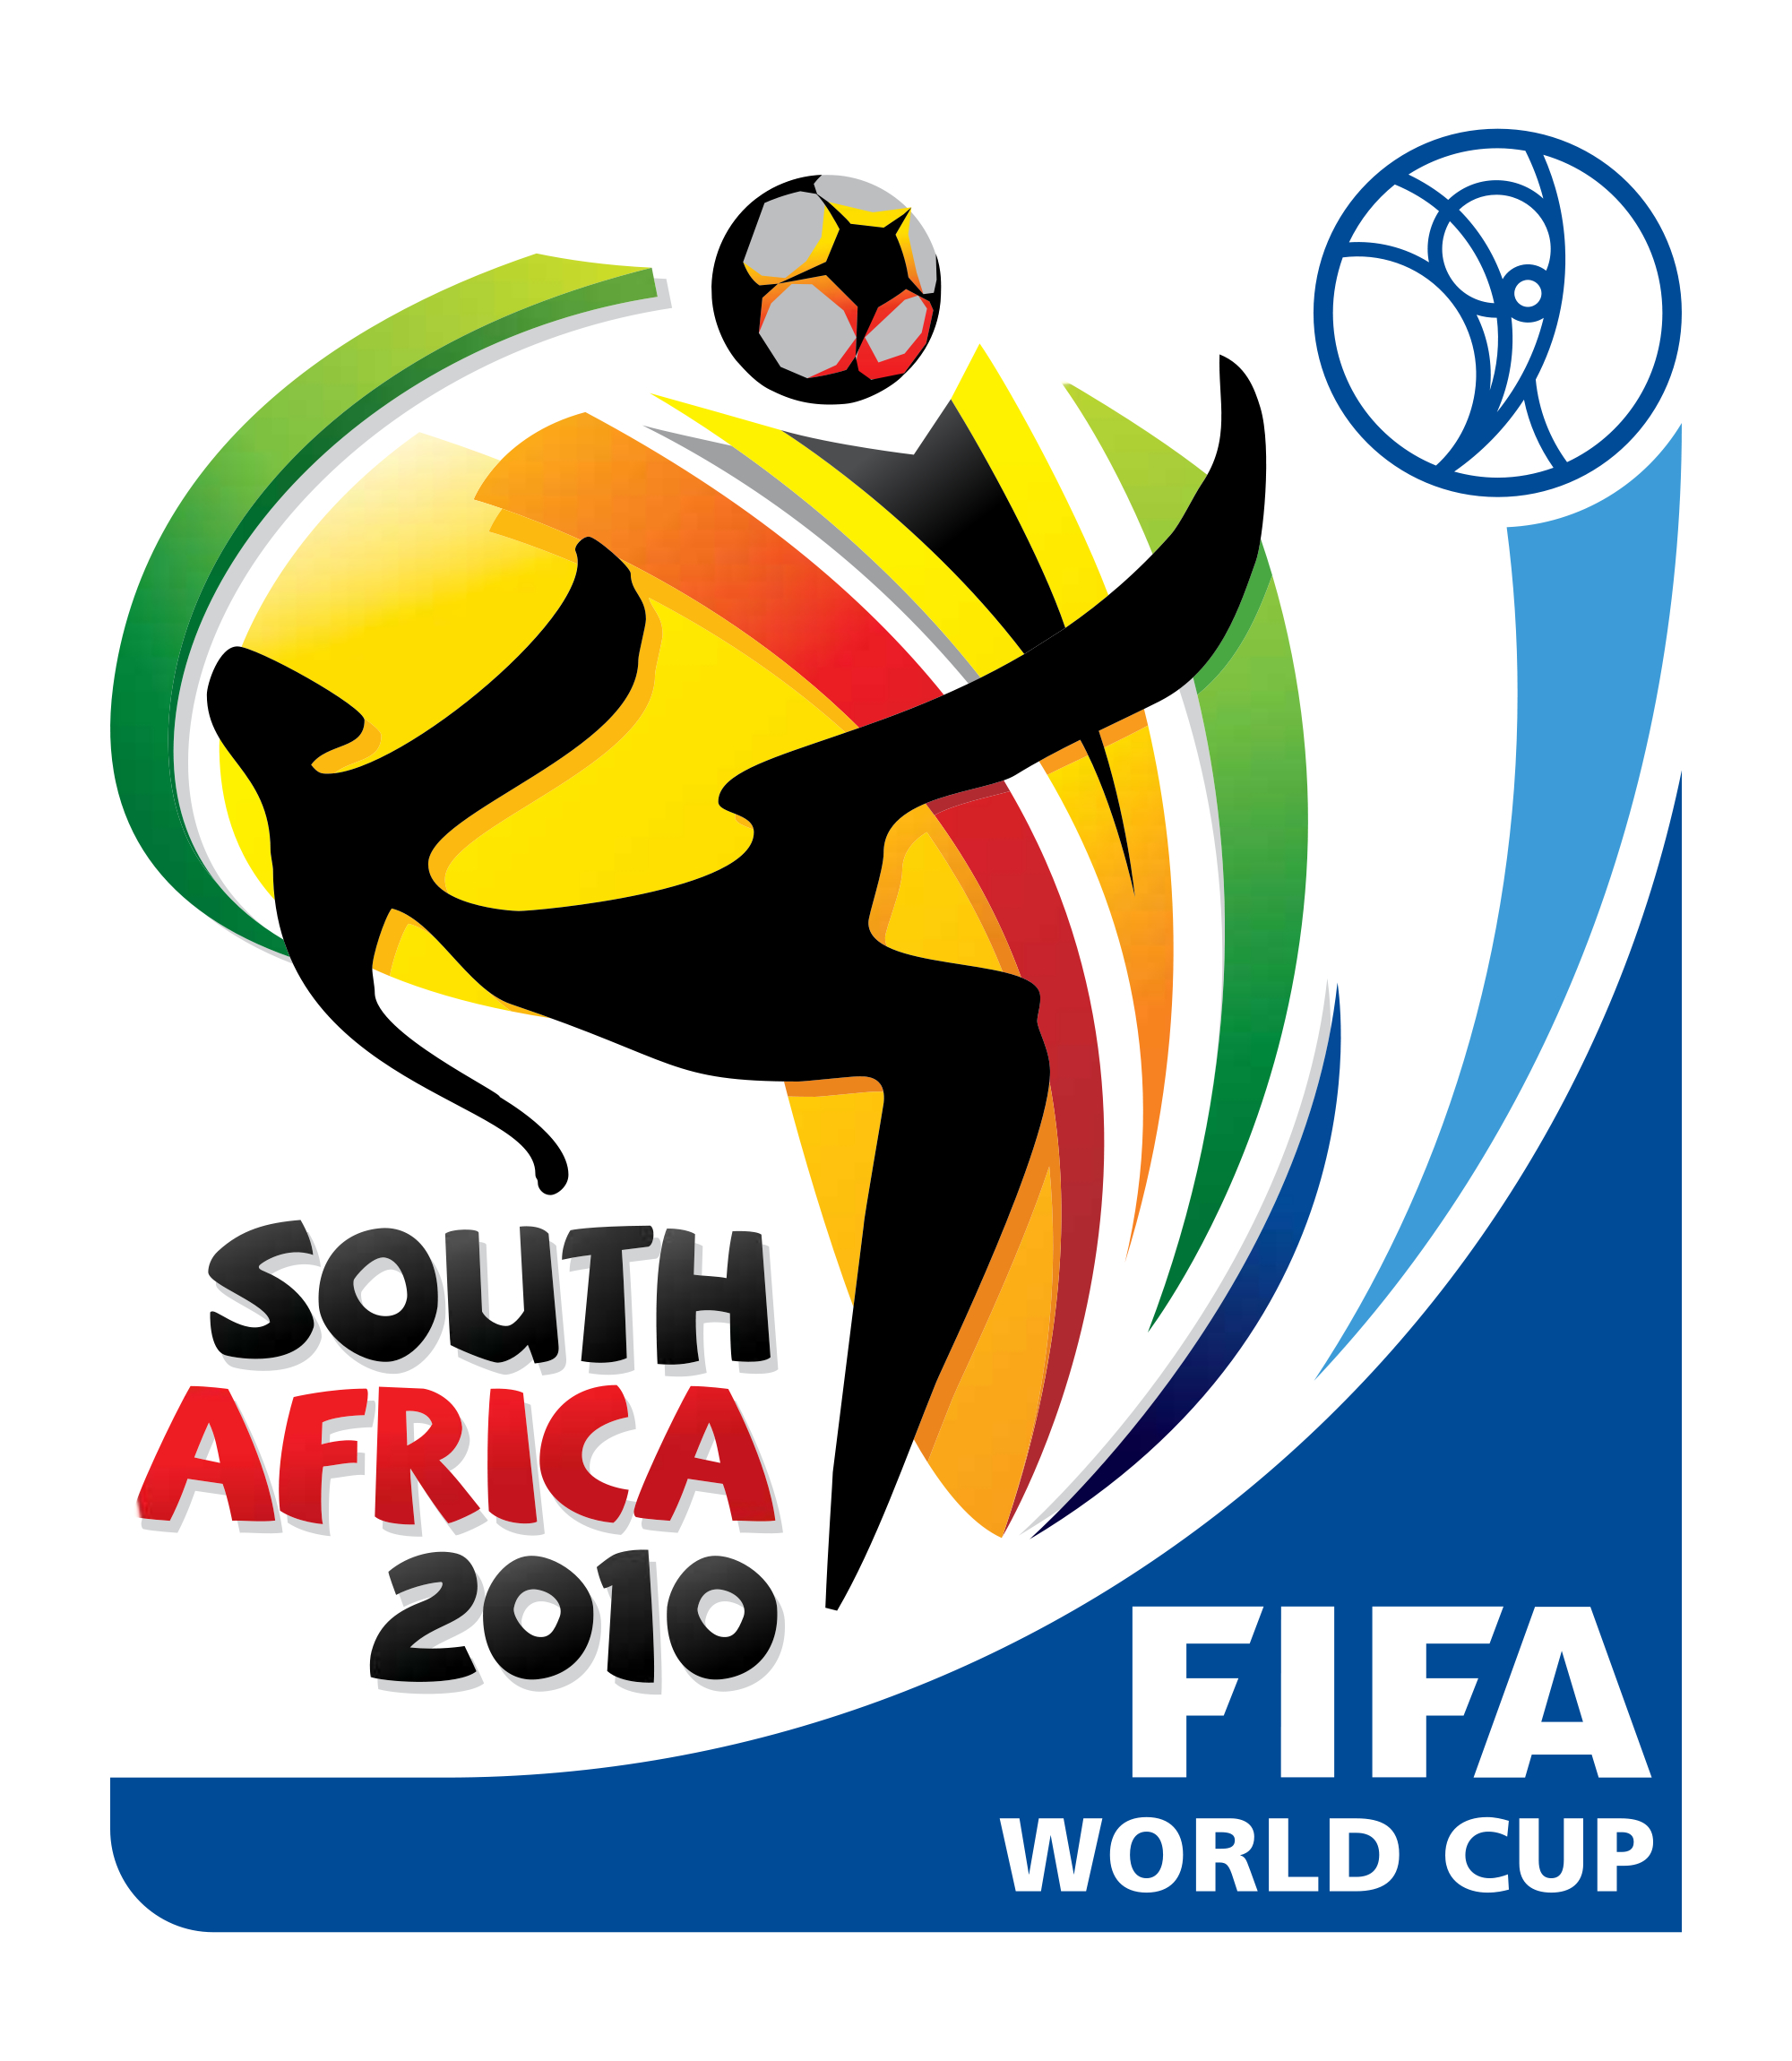 чемпионат мира по футболу, логотип, бренд, фирменный стиль, FIFA World Cup, logo, brand, Южная Африка 2010